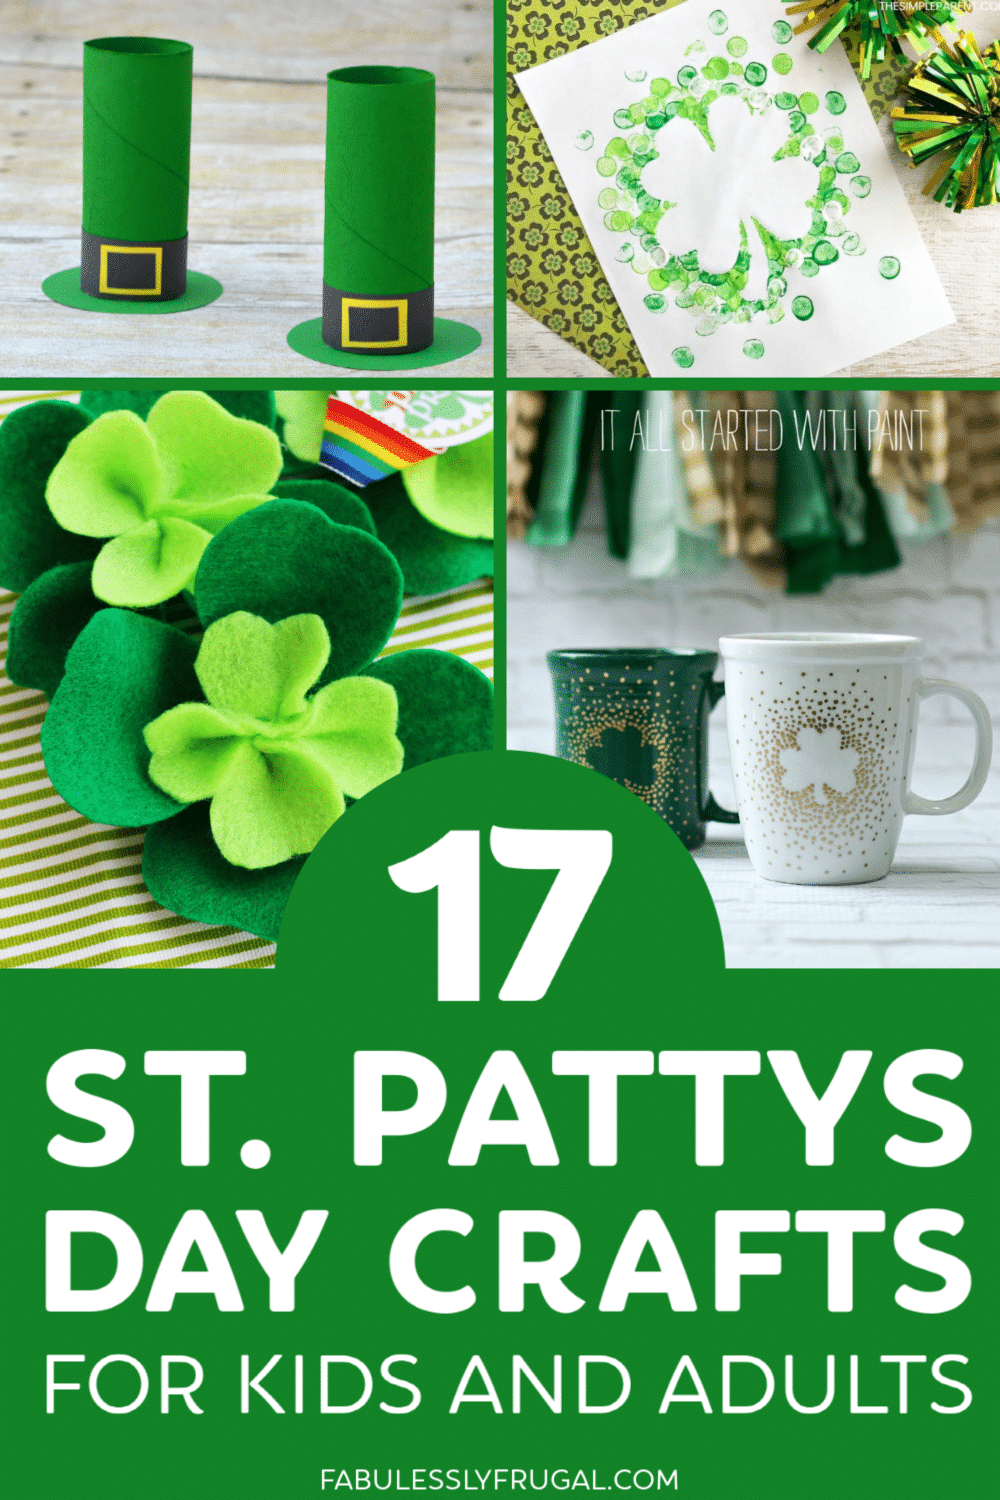 Saint Patrick's Day crafts